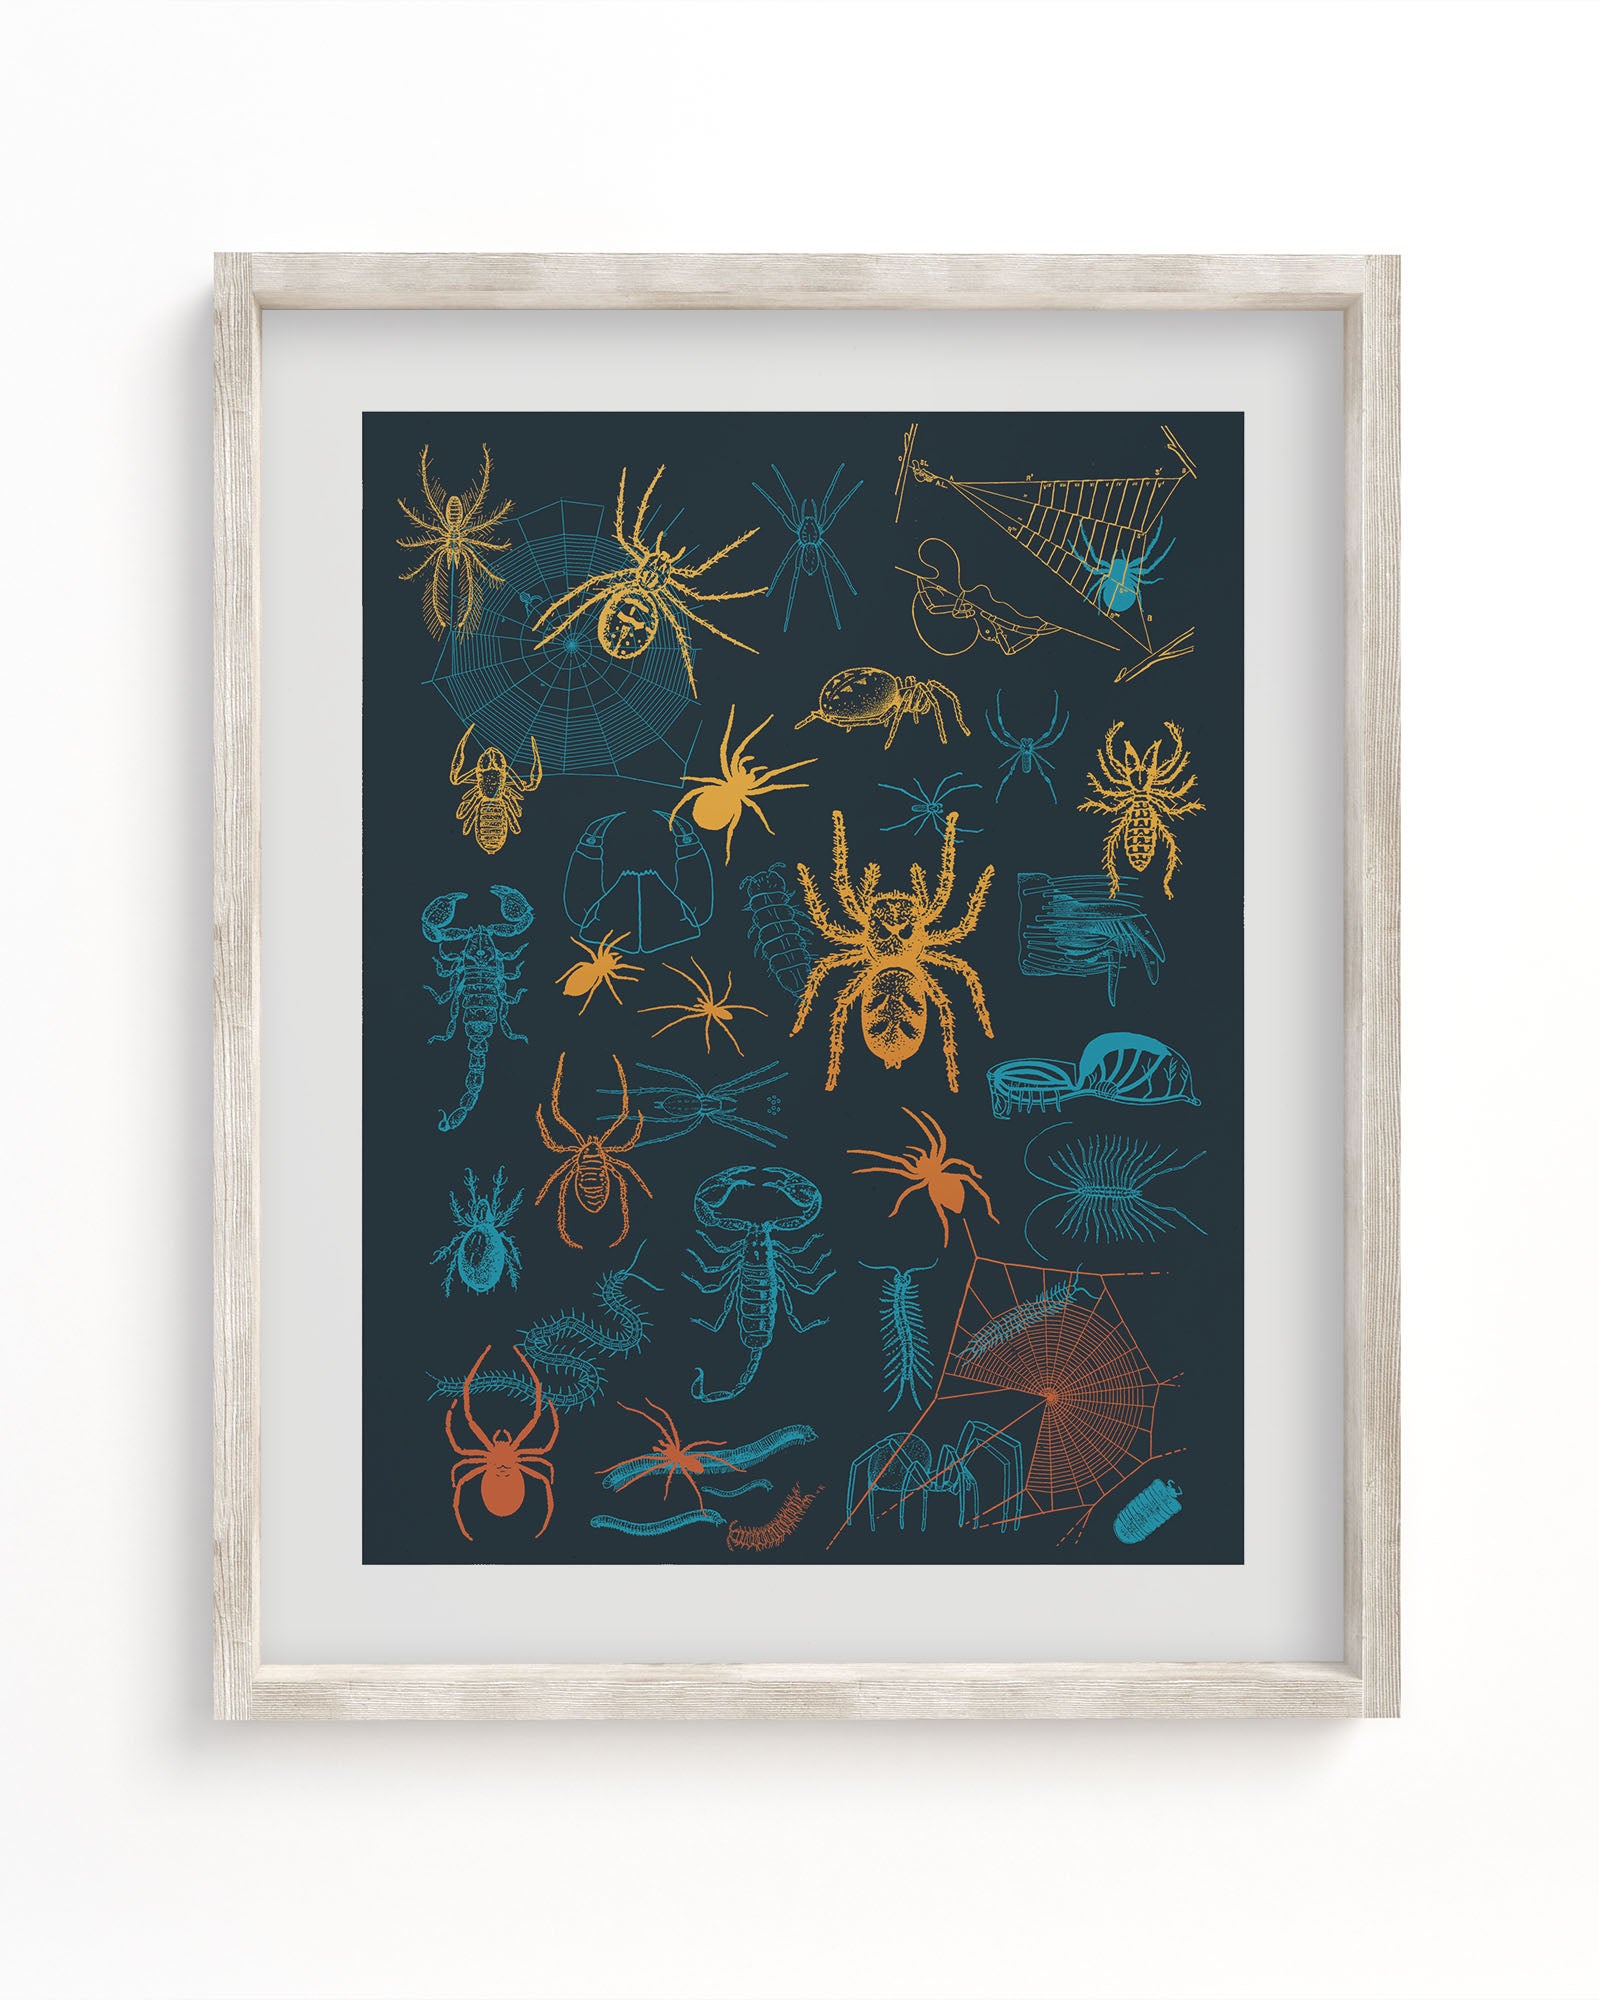 A Cognitive Surplus framed art print of Spiders Pl 2 Scientific Illustration Museum Print.